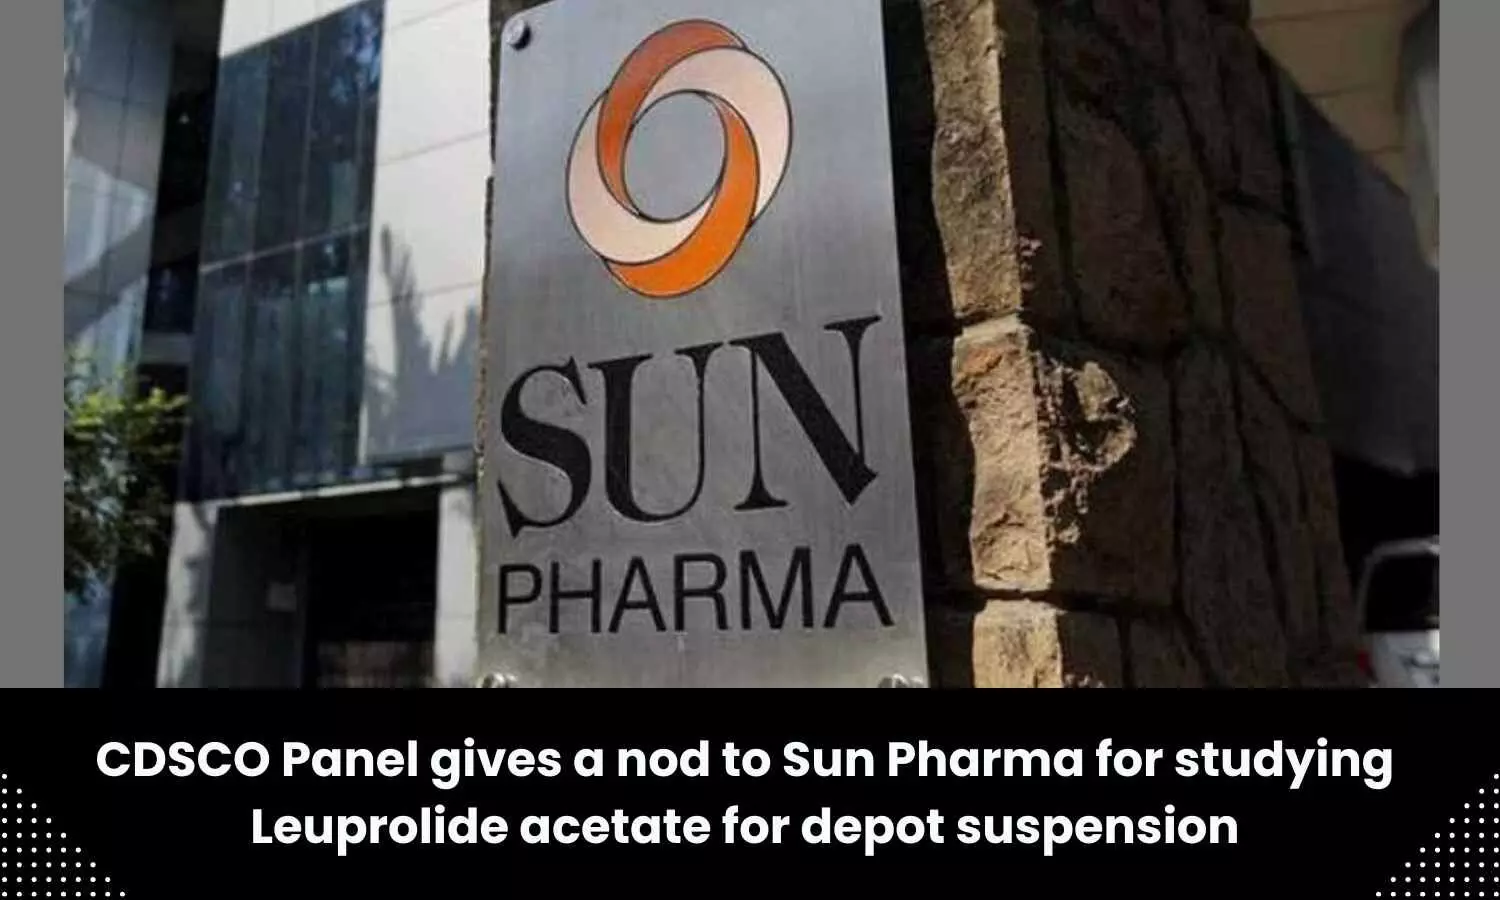 CDSCO panel nod to Sun Pharma to study of anticancer drug Leuprolide acetate for depot suspension